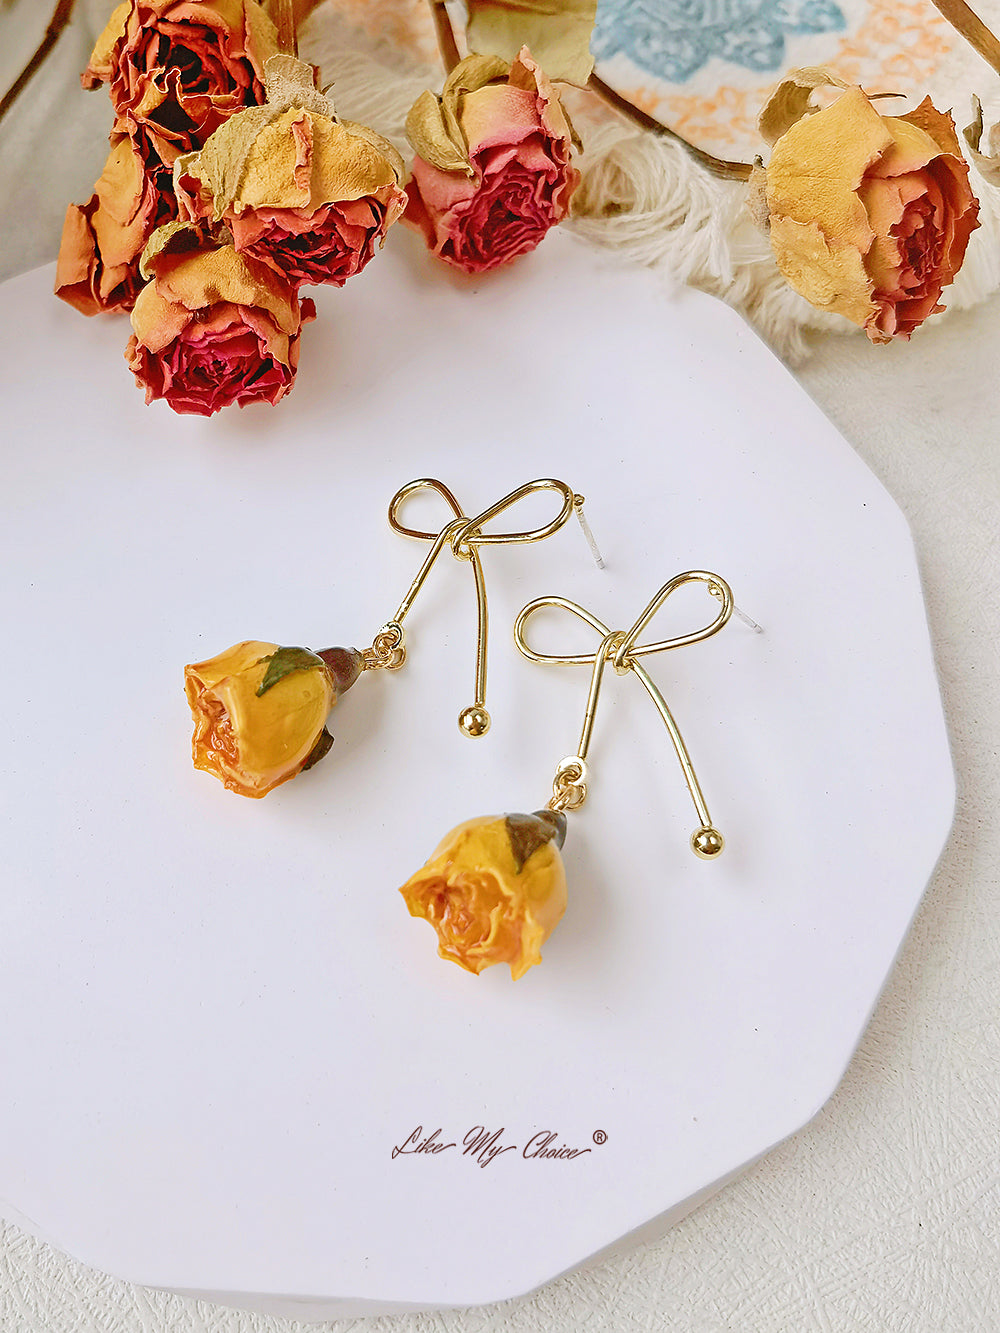 Rose Bow Dried Flowers Earrings